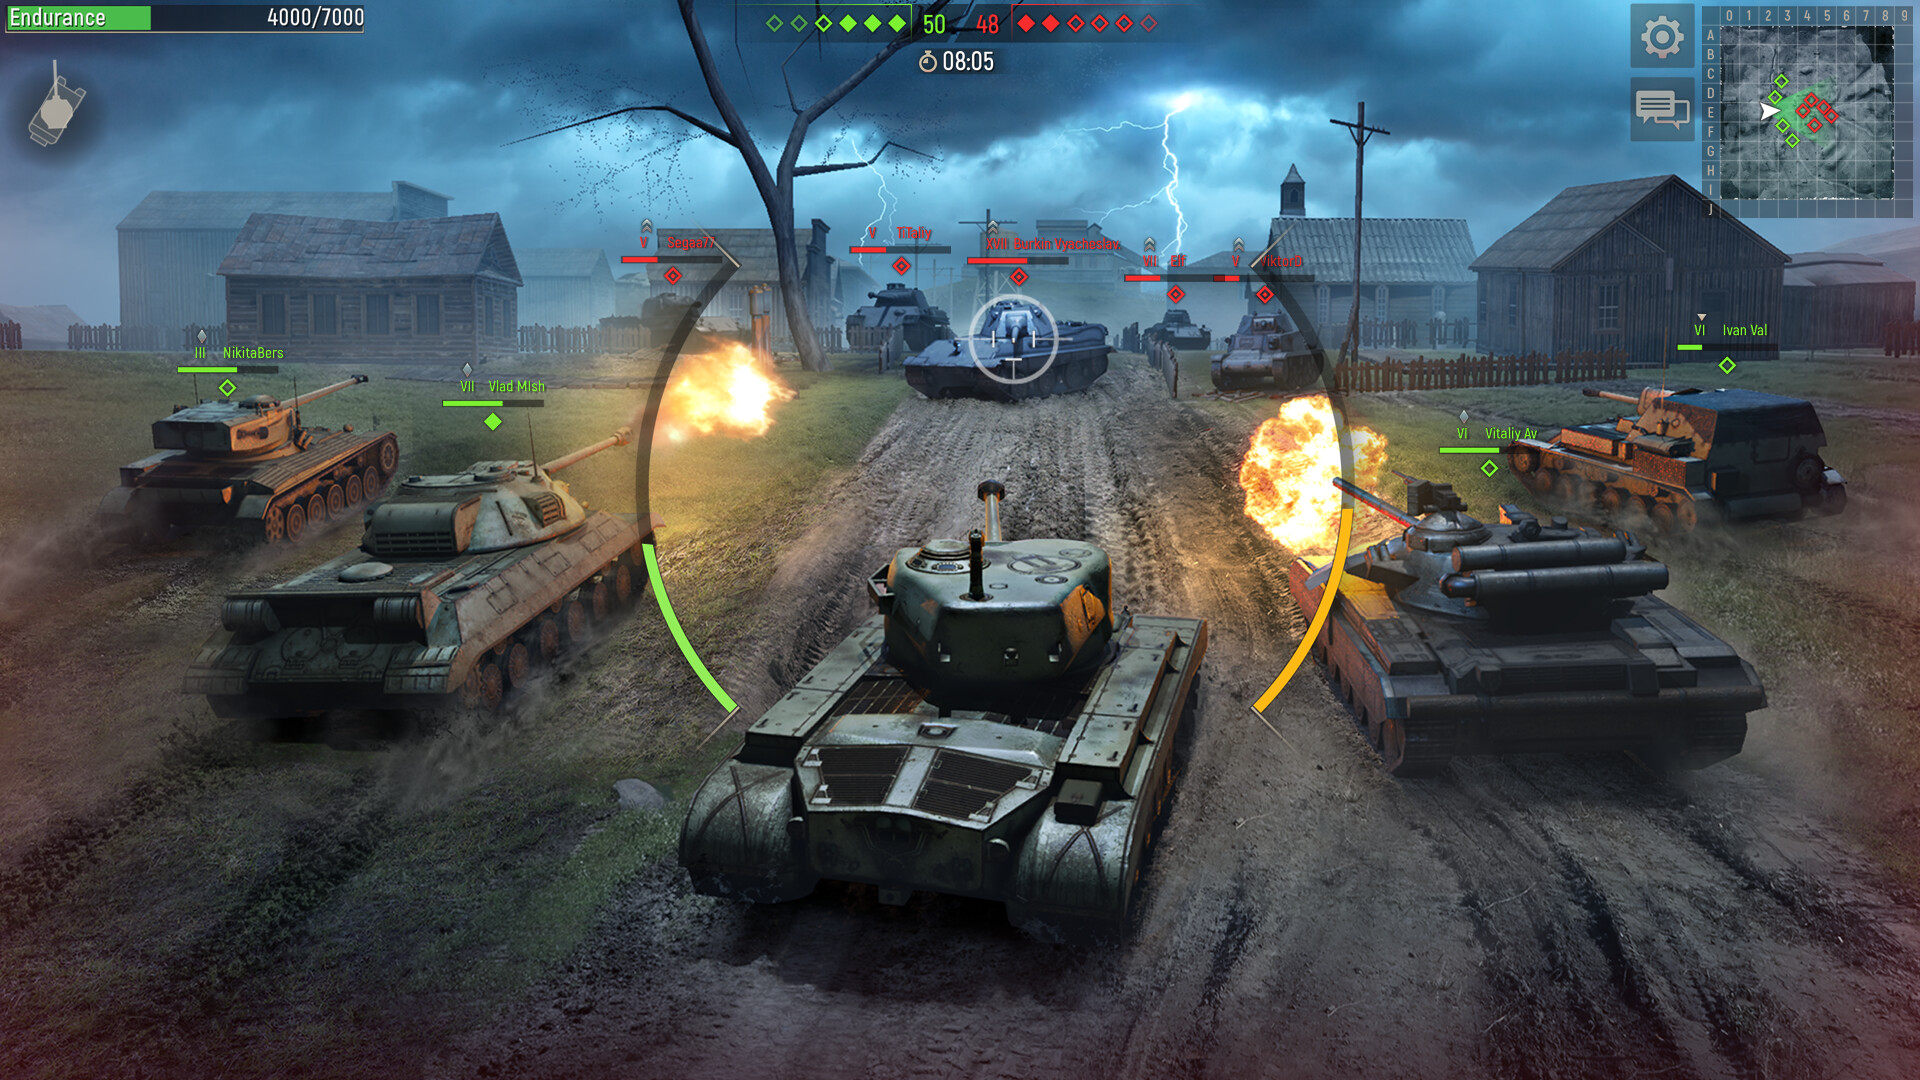 Download & Play Battle Tank 2 on PC & Mac (Emulator)